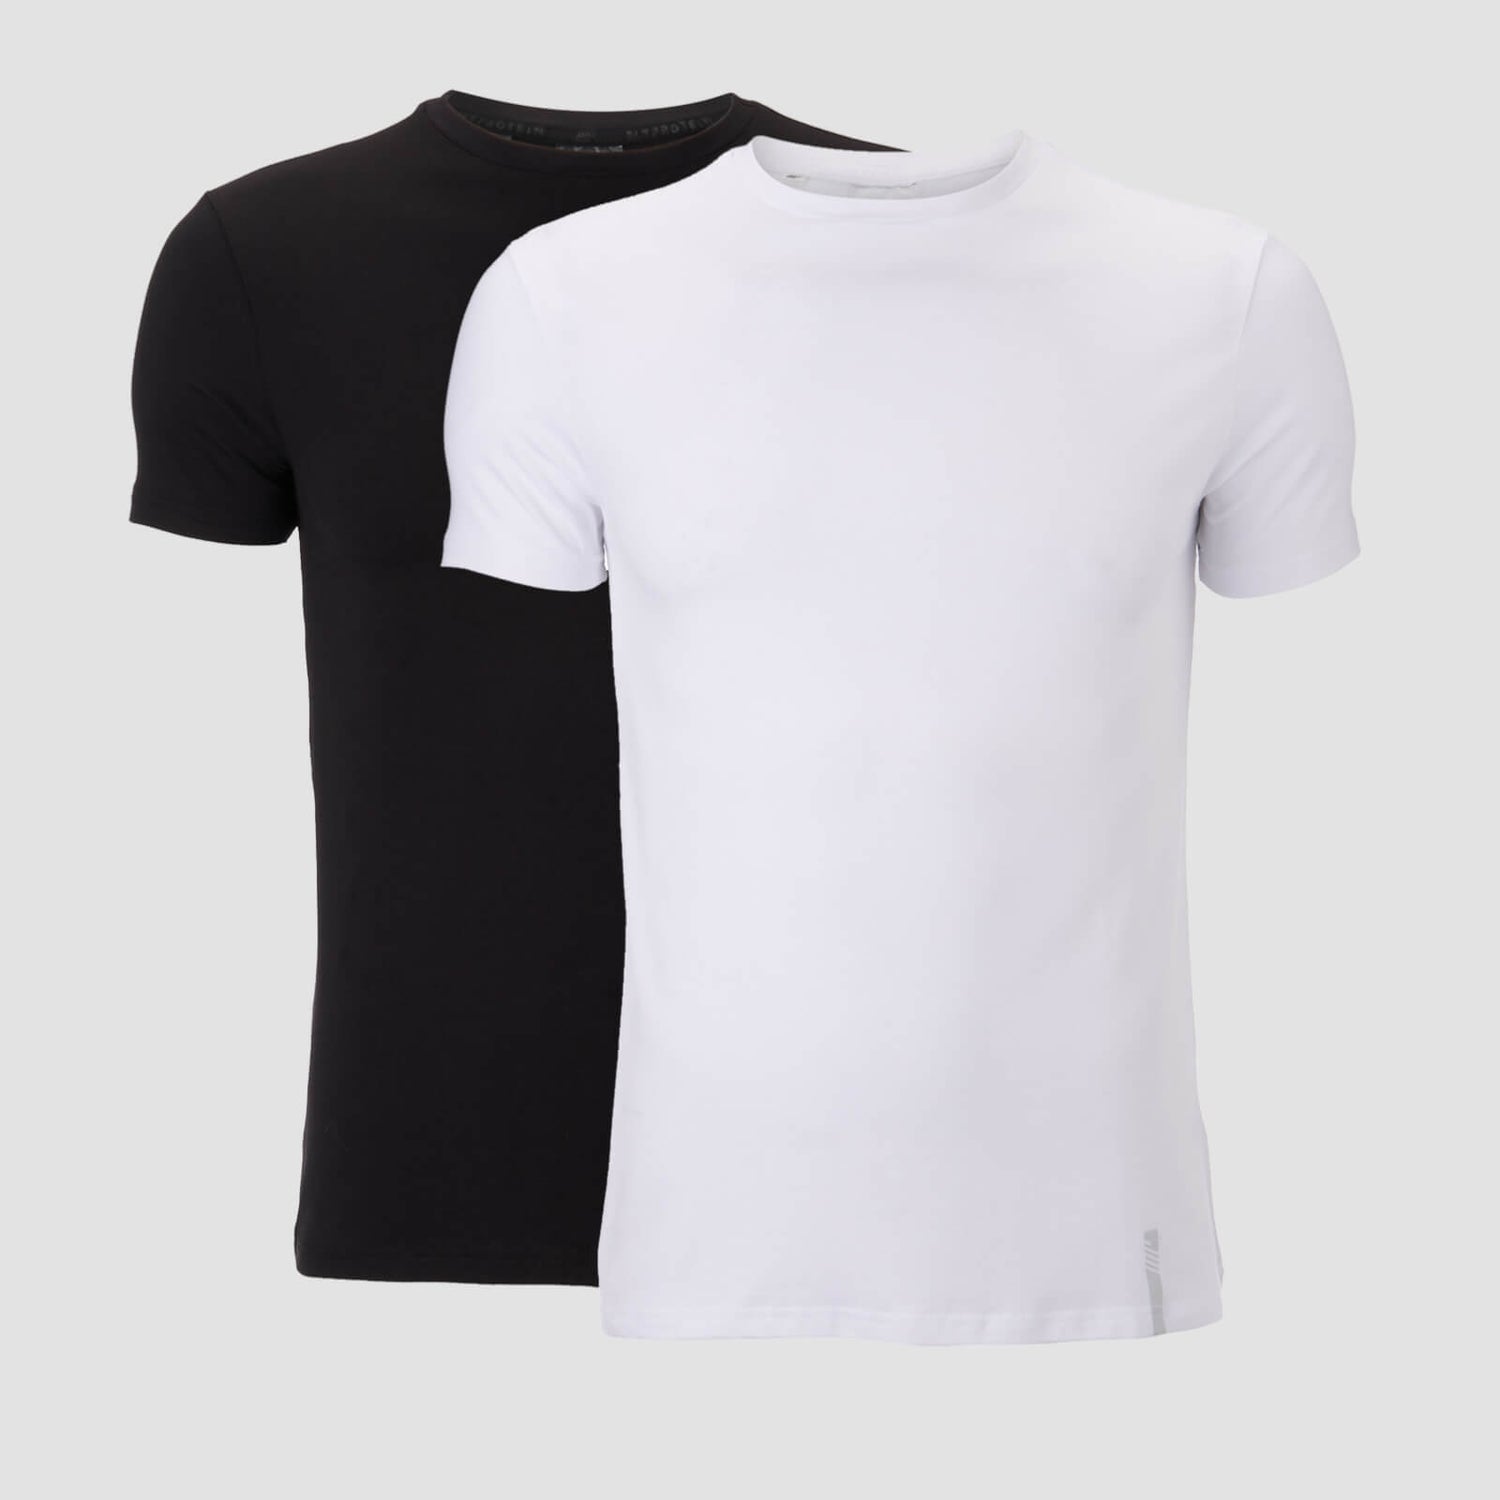 Luxe Classic Crew T-Shirt (2-pack) - Svart/Vit - M